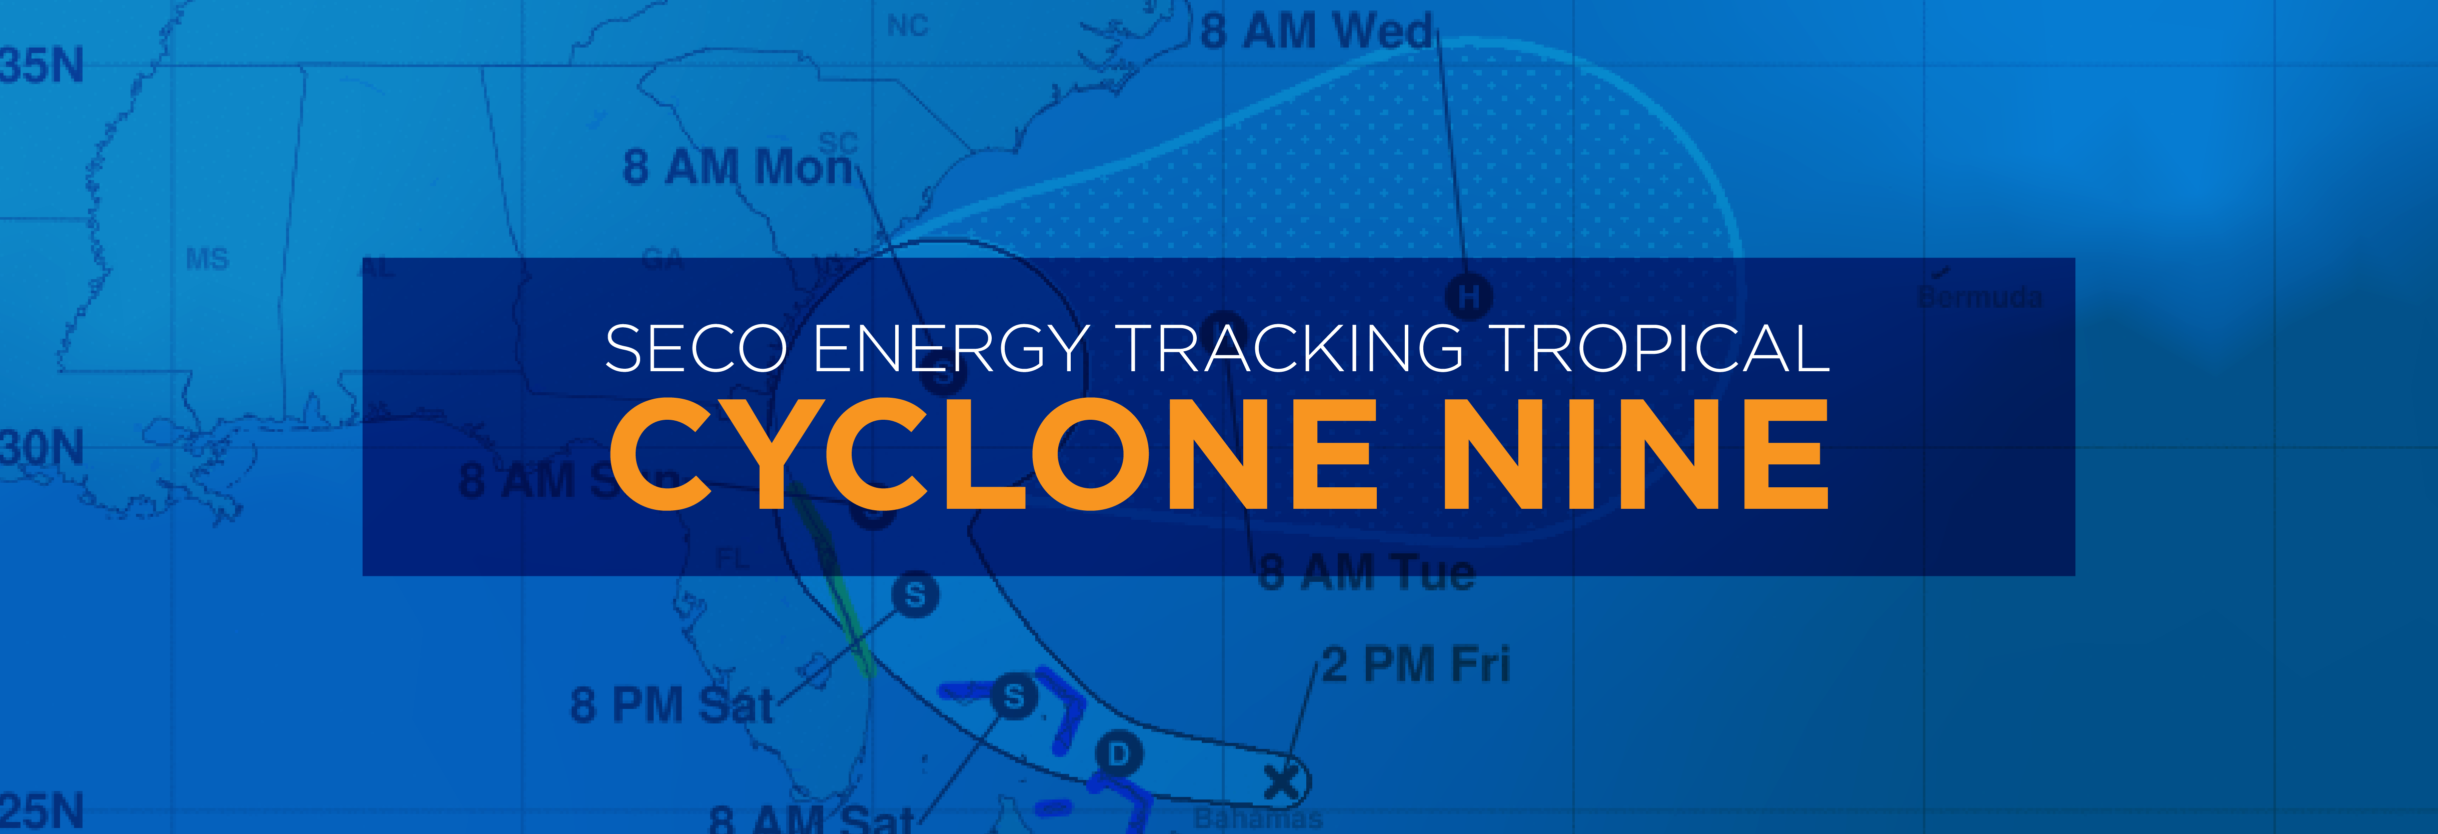 SECO Energy Tracking Tropical Cyclone Nine